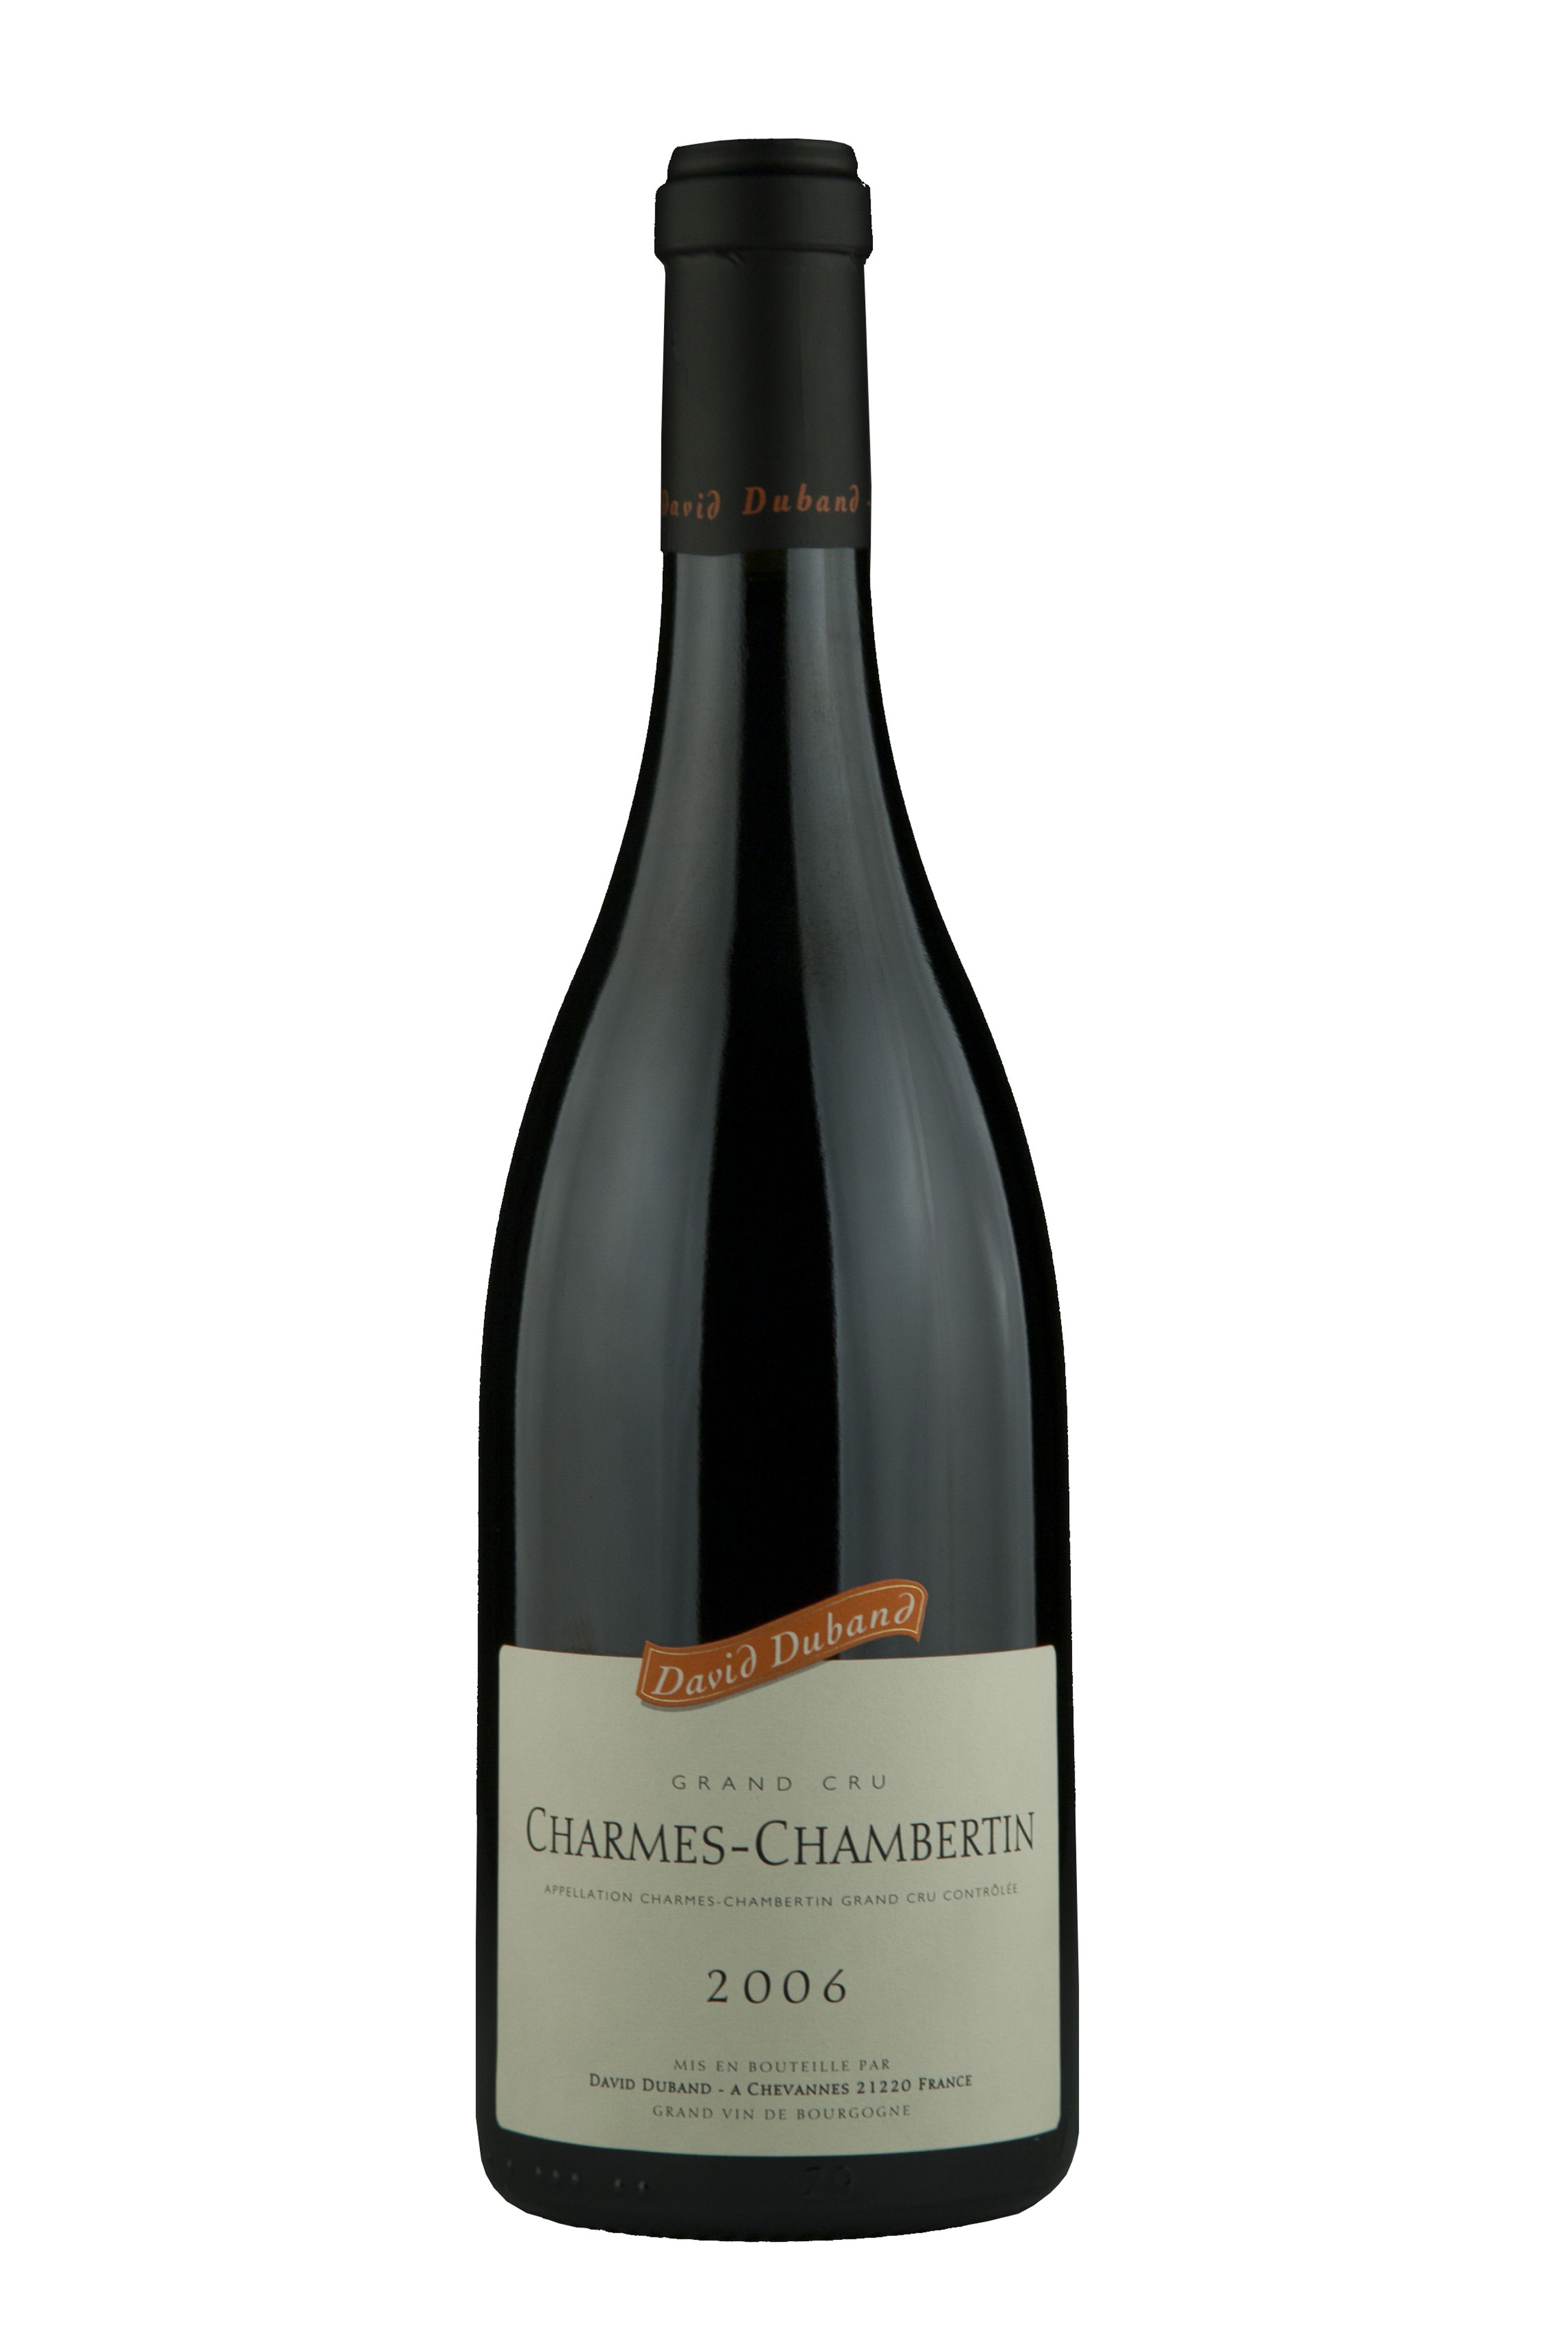 Charmes-Chambertin Grand Cru Domaine David Duband 2006